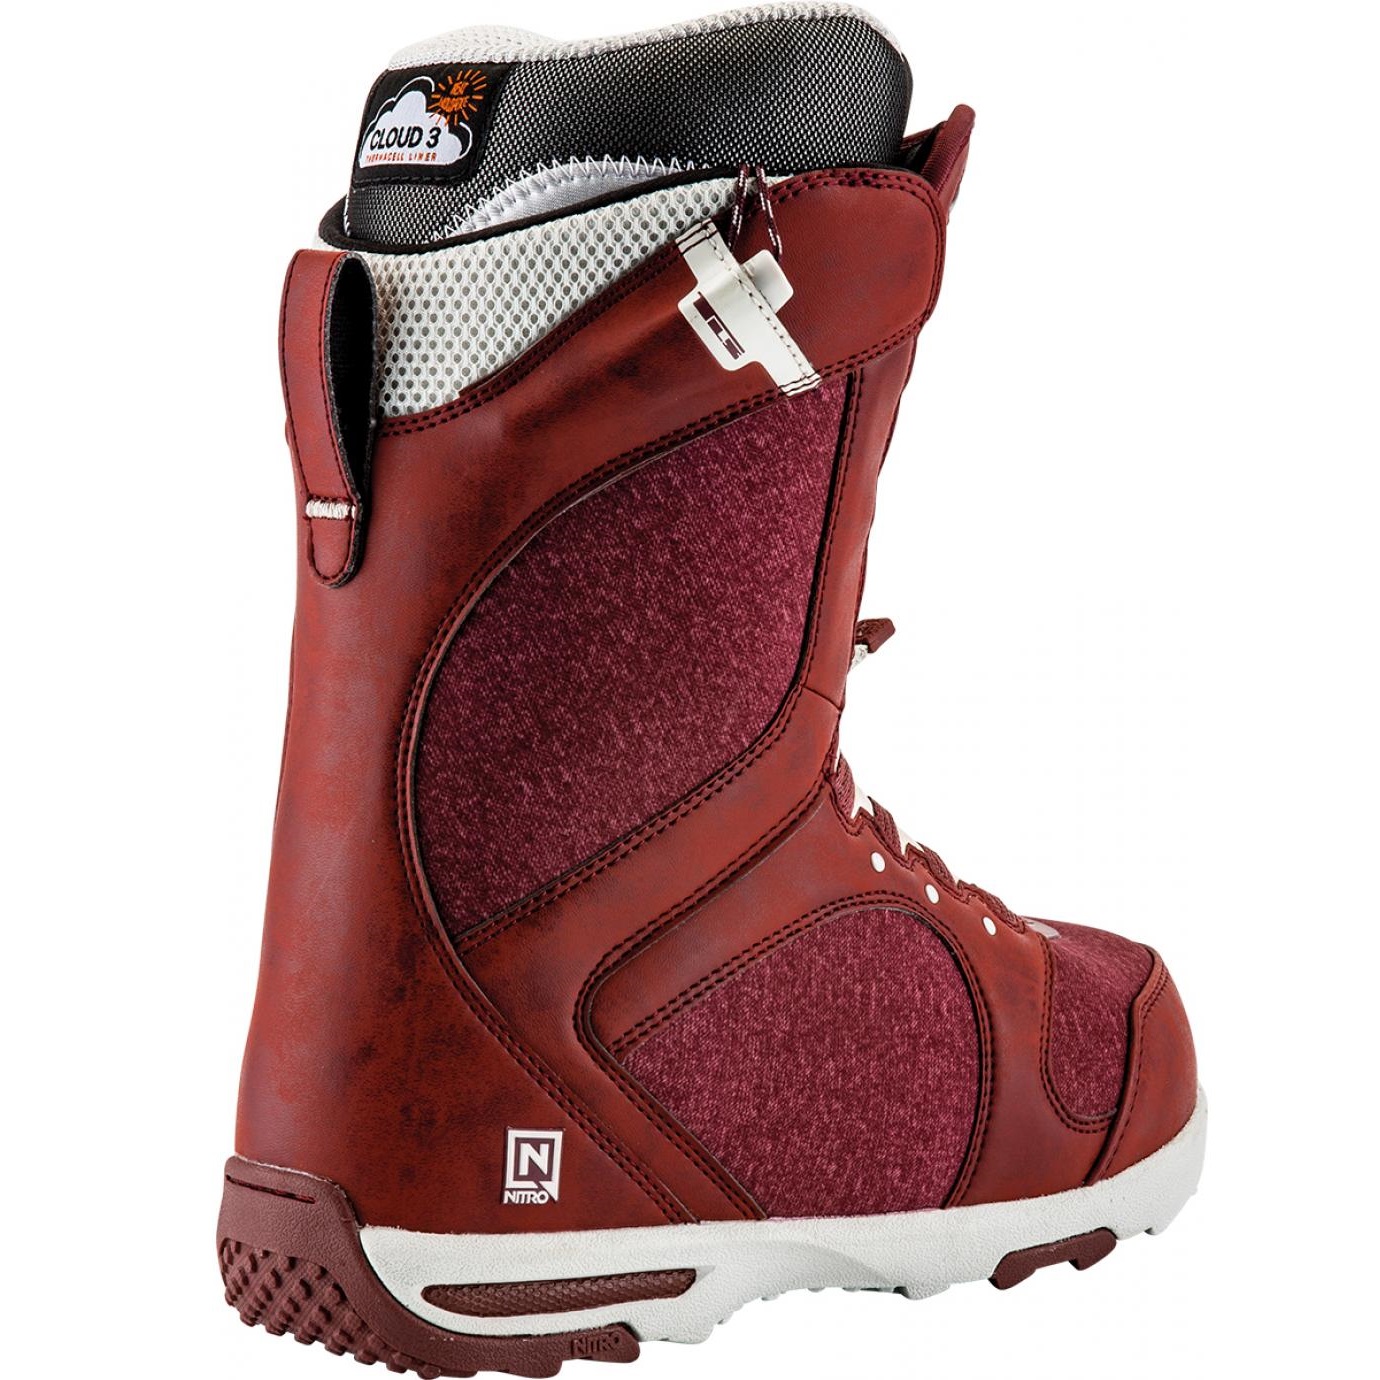 Snowboard Boots -  nitro Monarch TLS 